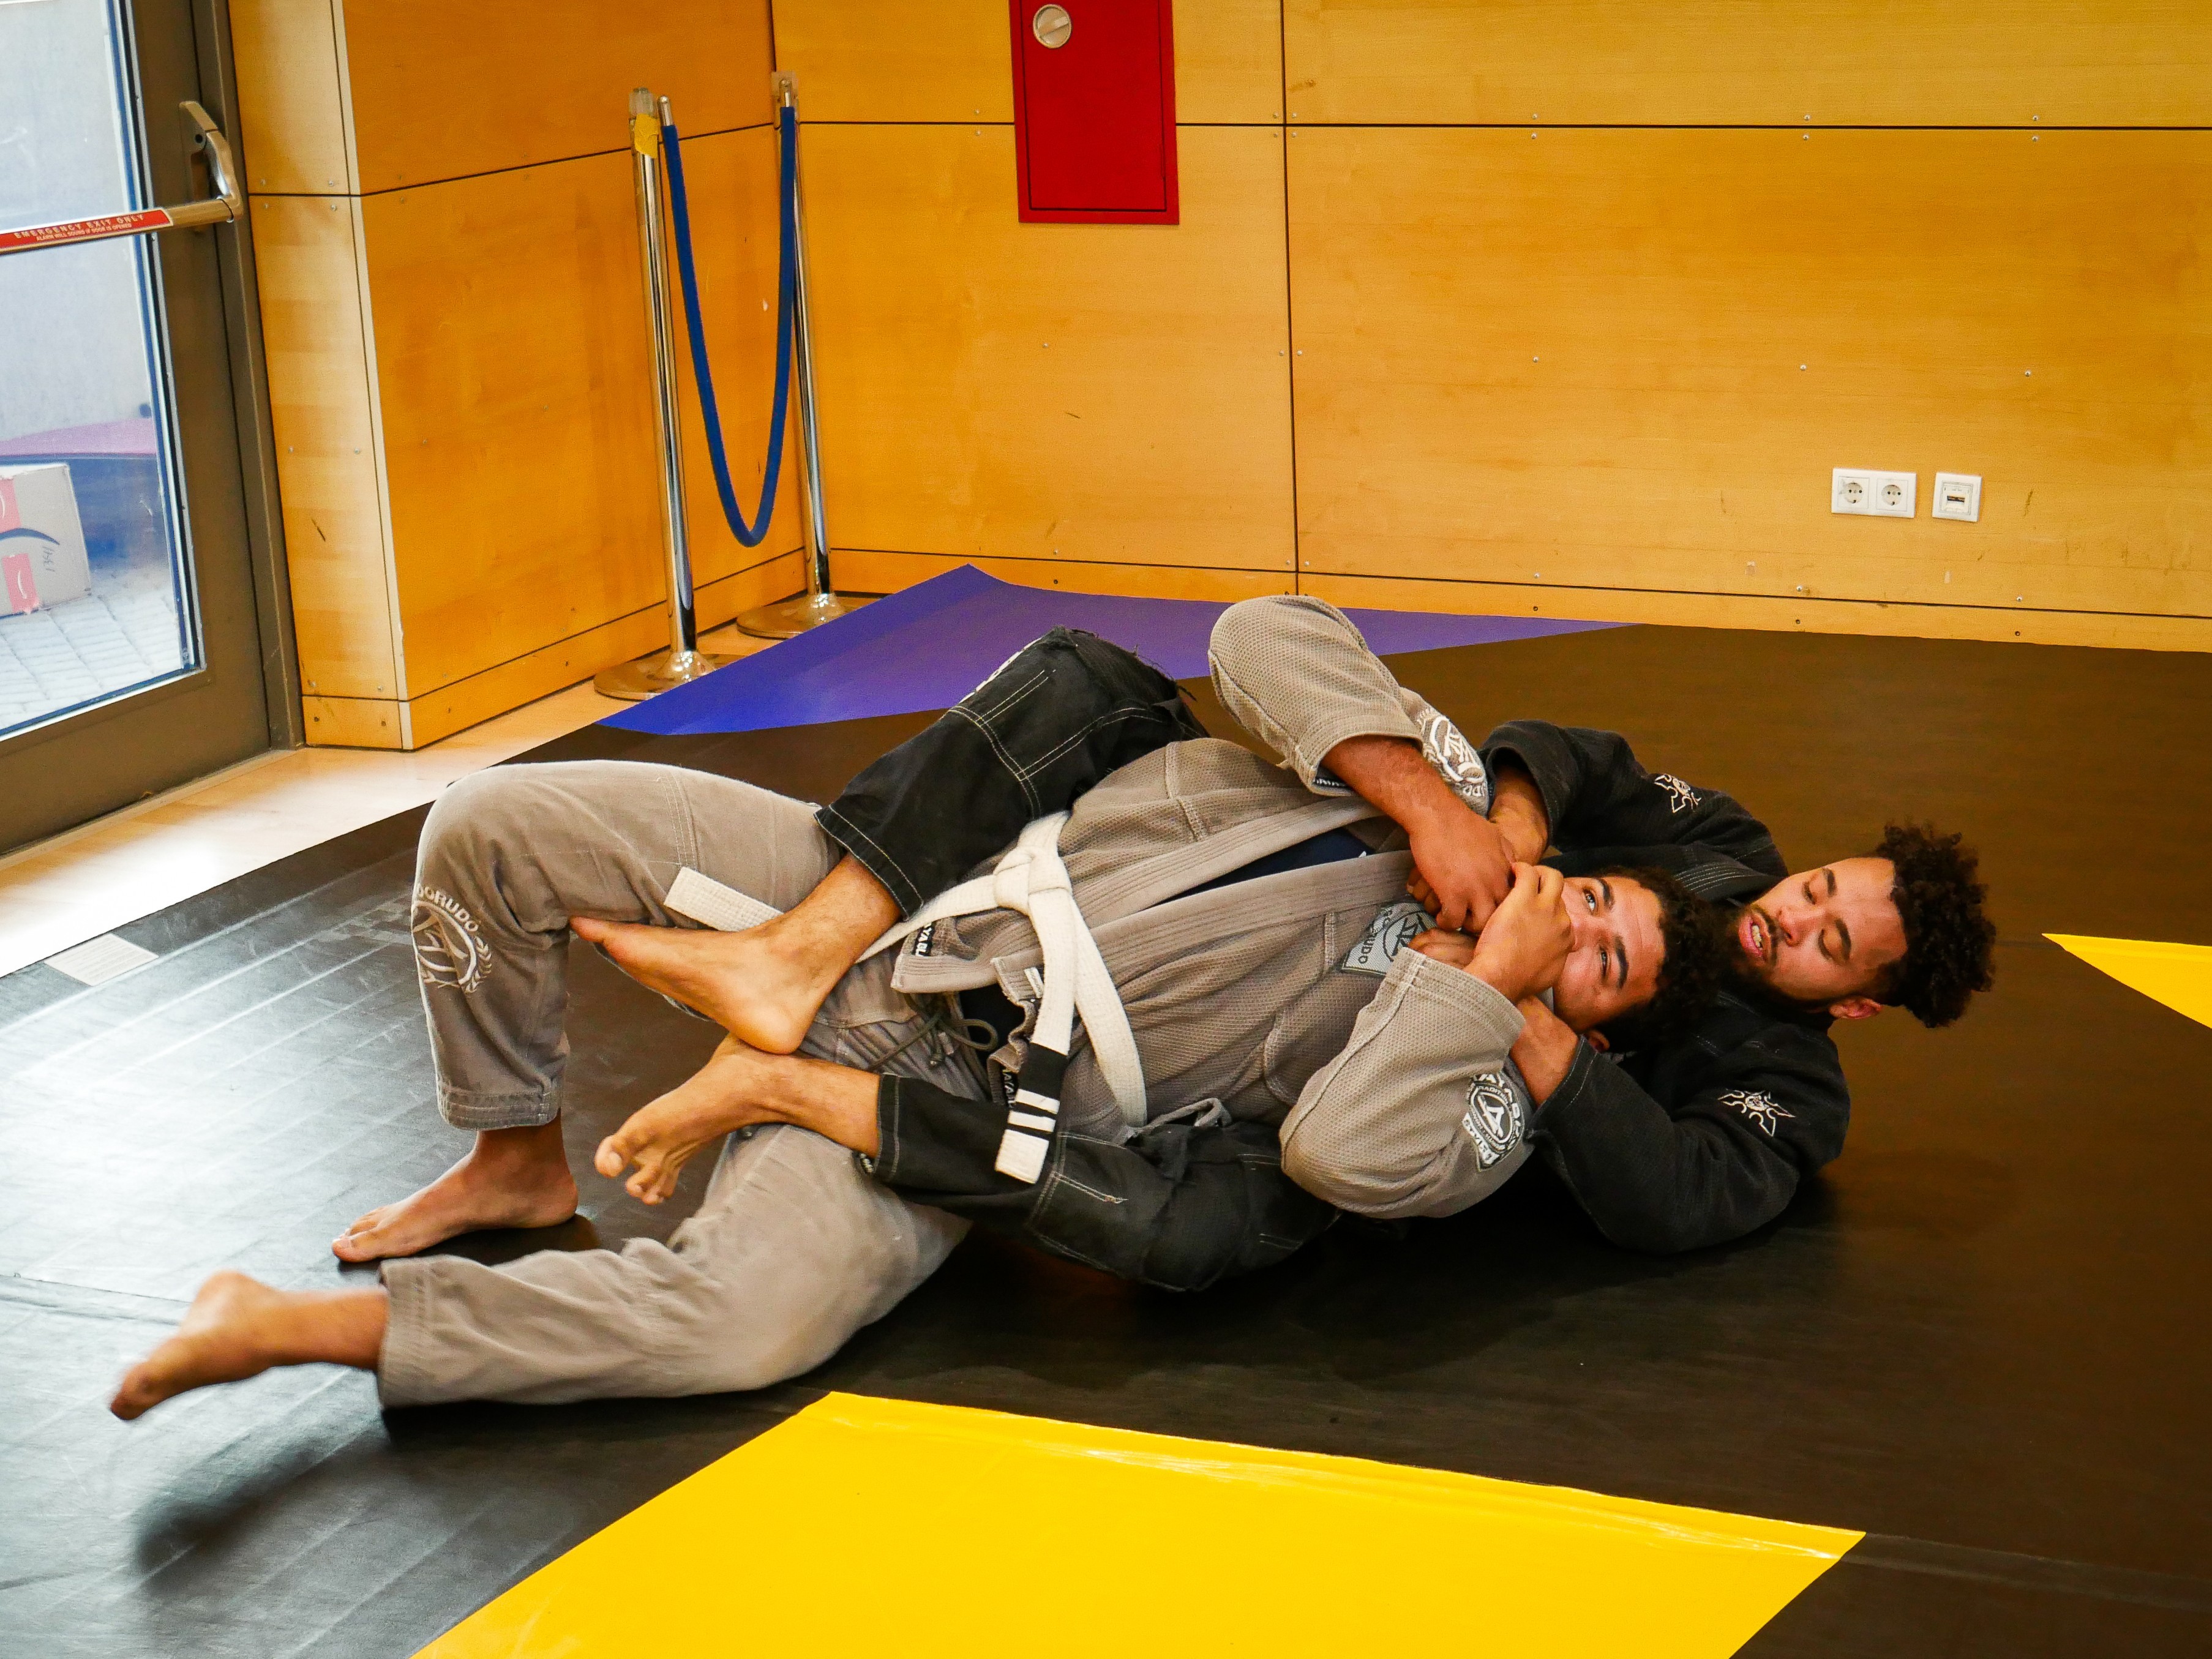 Clay Brazilian Jiu-jitsu Club: 'Rolling for Resiliency' | Article | The  United States Army